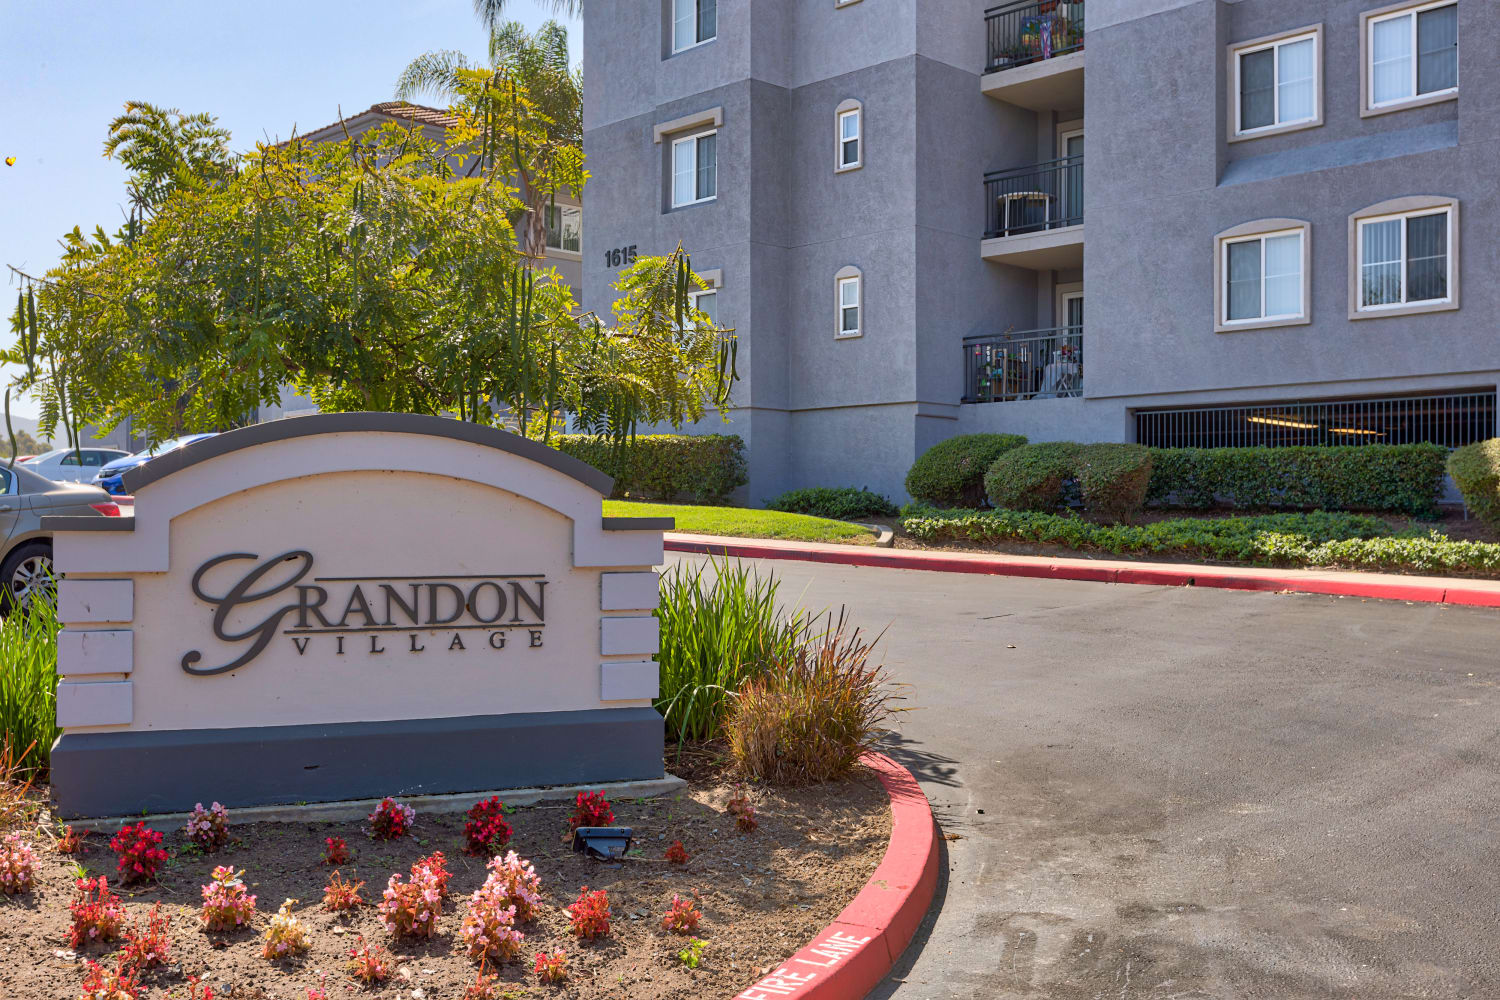 Grandon Village apartment homes in San Marcos, California